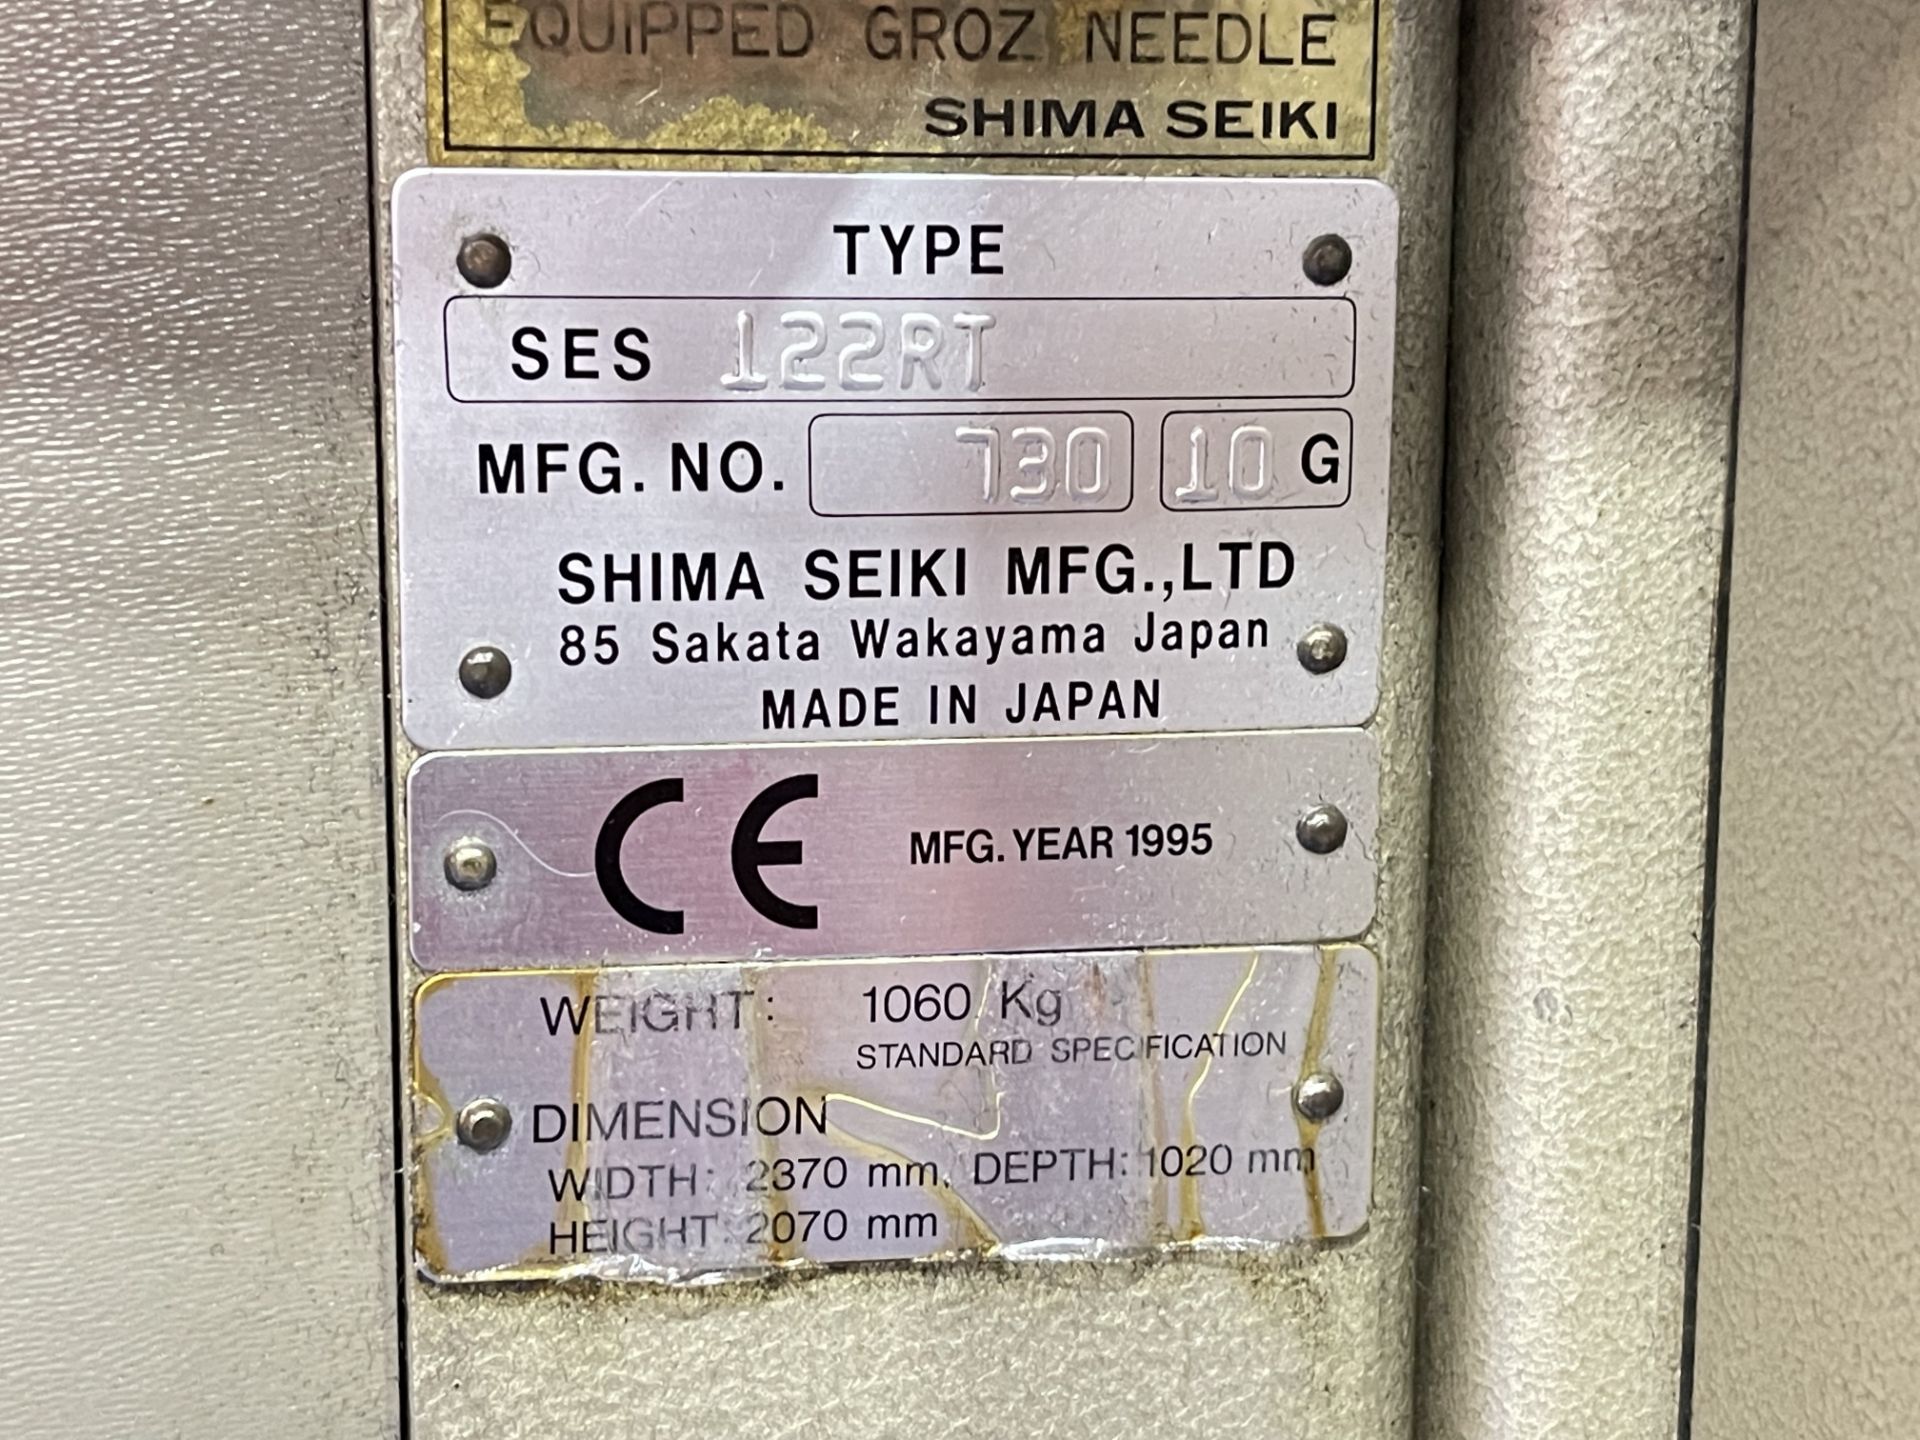 Shima Seiki SES122RT Computerised 10 Gauge Flatbed Knitting Machine - Image 7 of 7